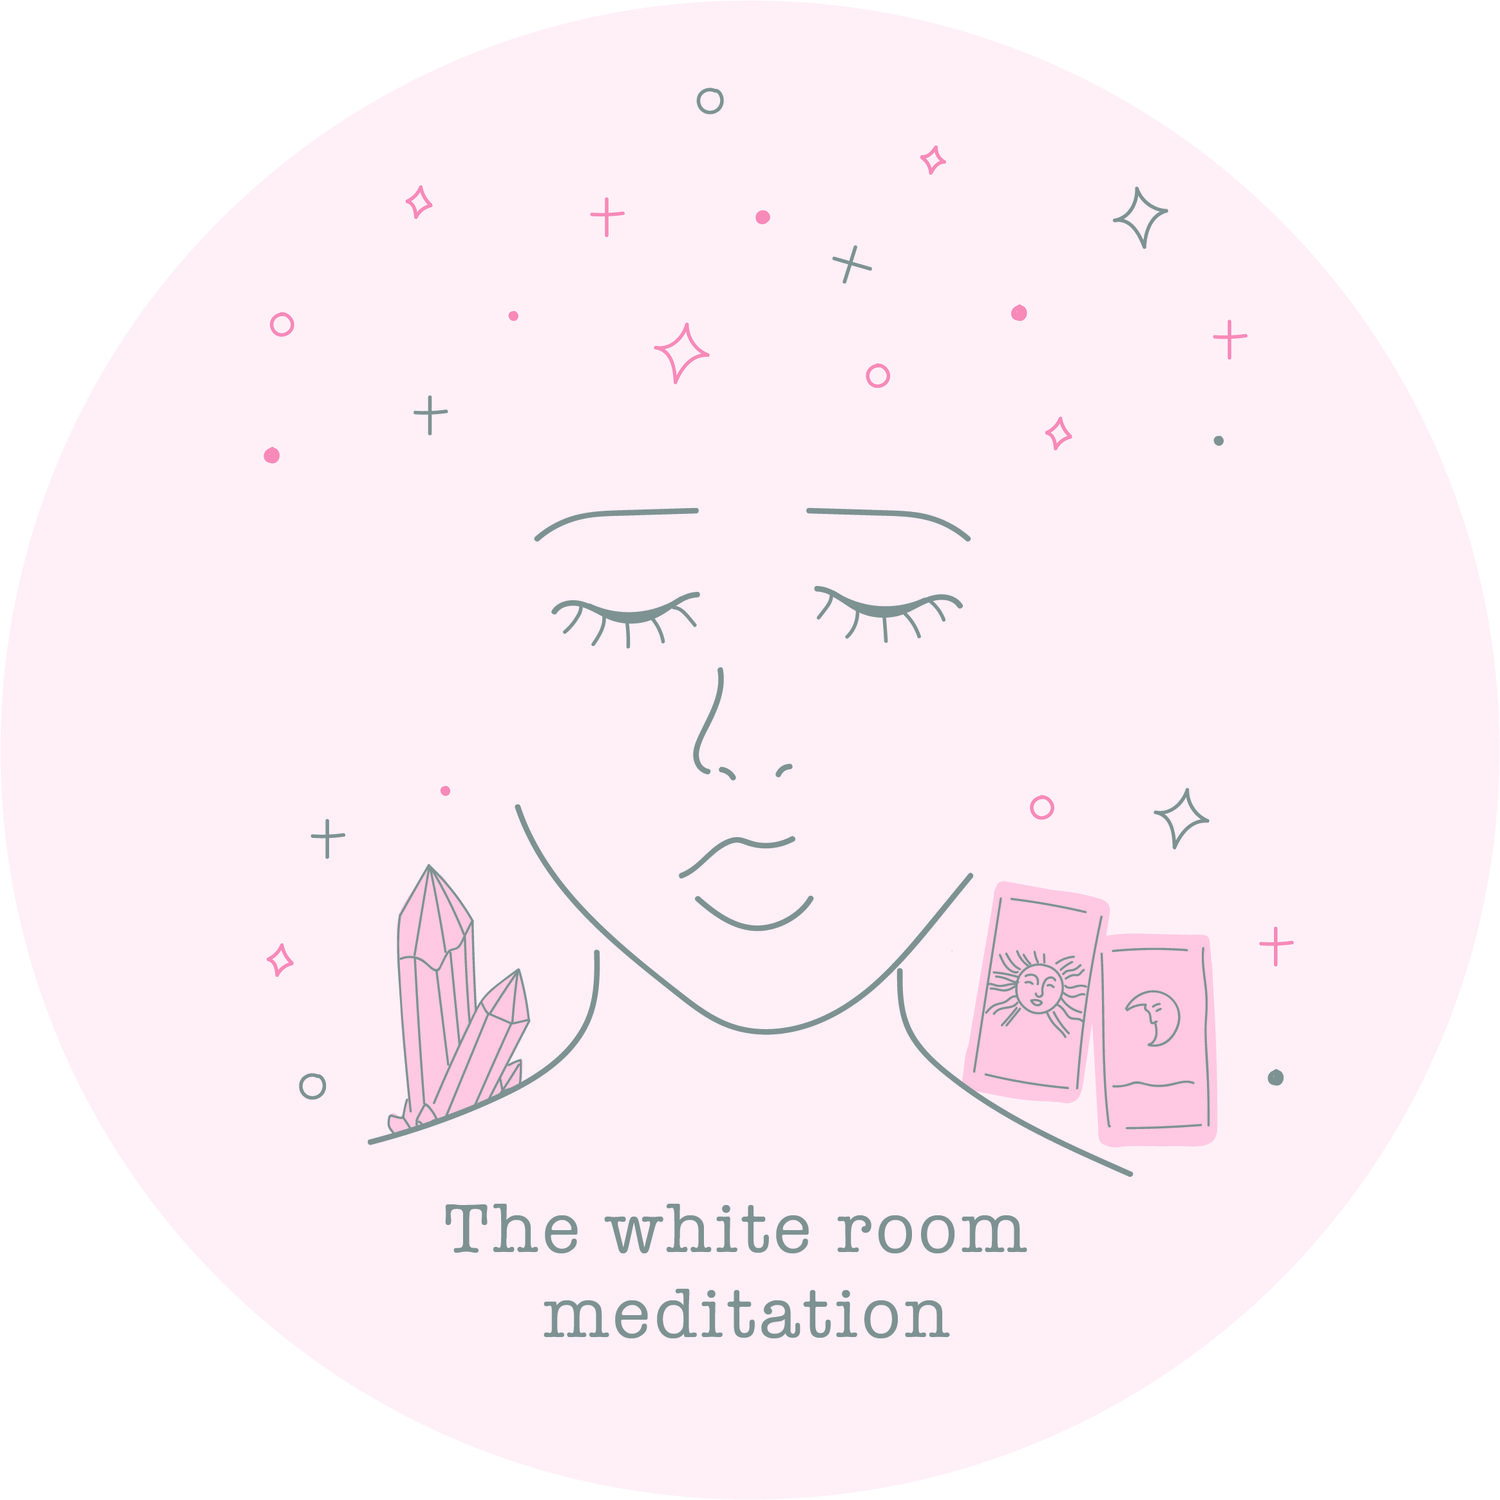 The white room meditation